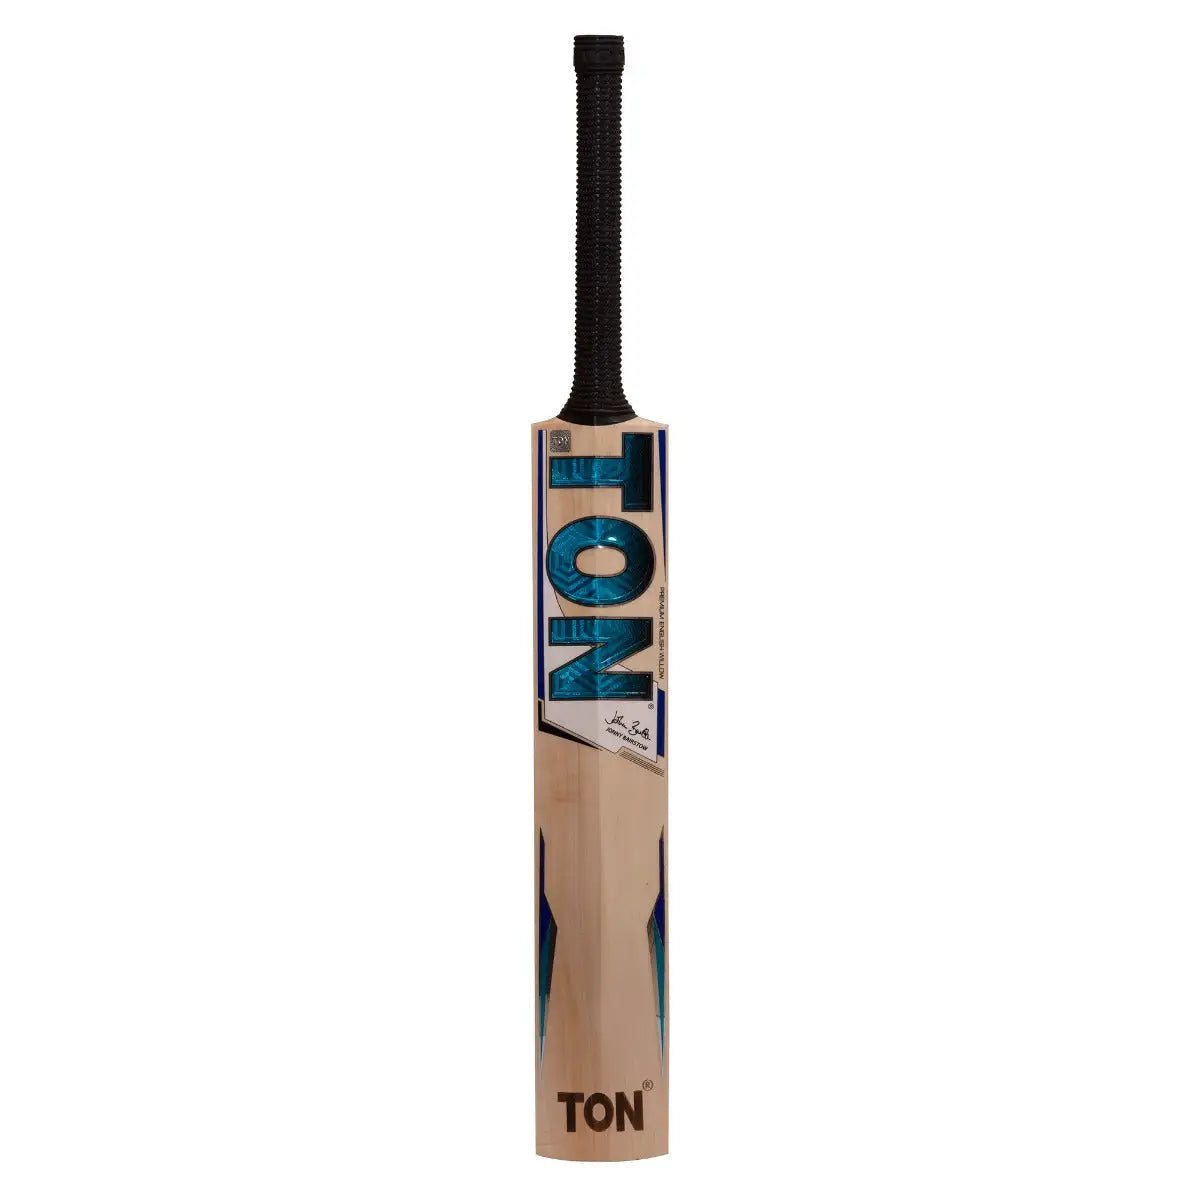 SS Ton Elite Cricket Bat English Willow - Short Handle (Standard Adult Size Bat) - BATS - MENS ENGLISH WILLOW